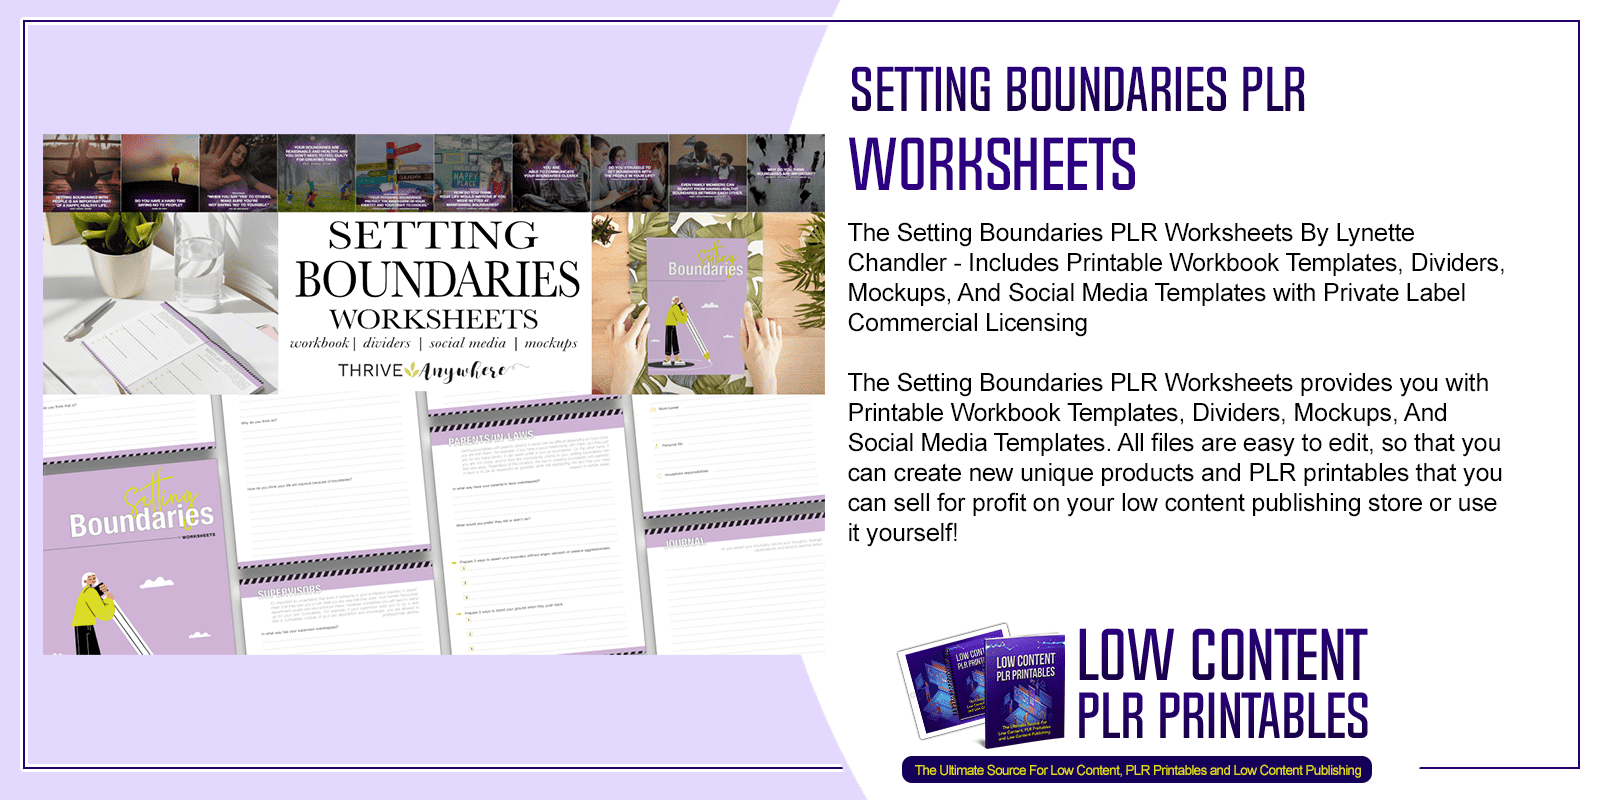 Setting Boundaries PLR Worksheets